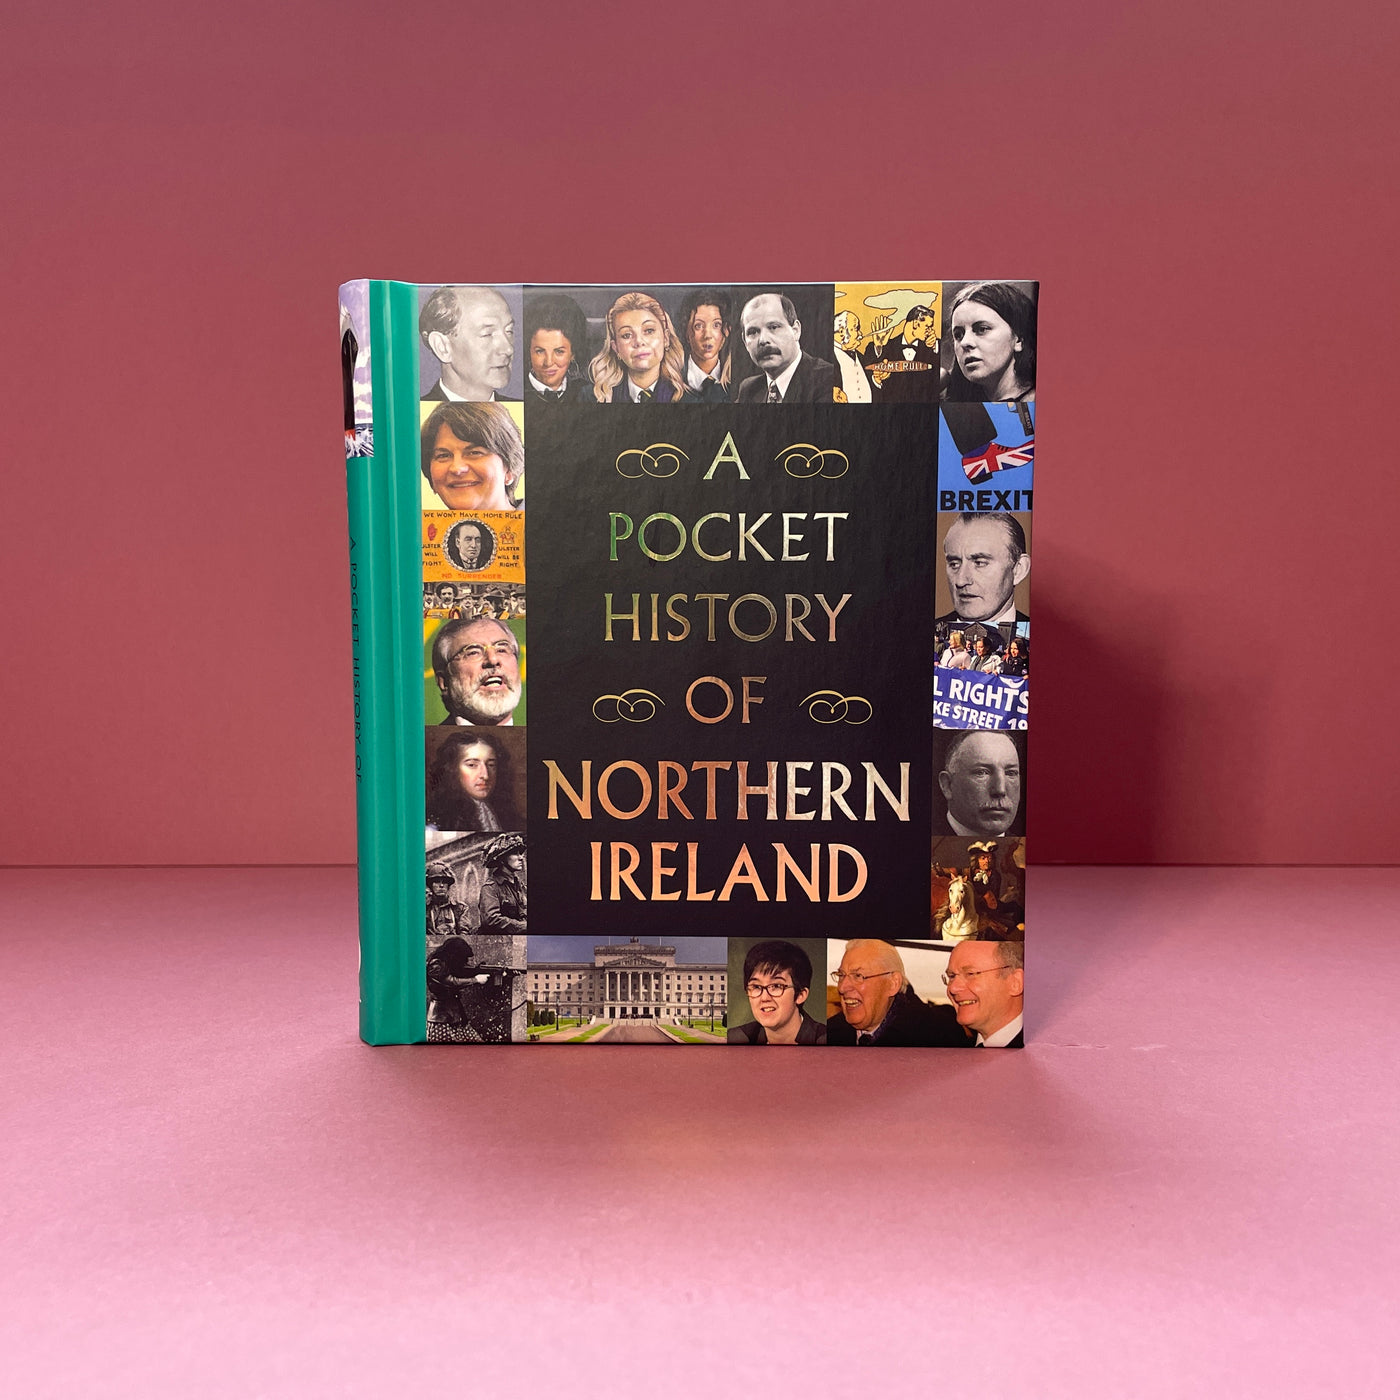 The Pocket History of Northern Ireland